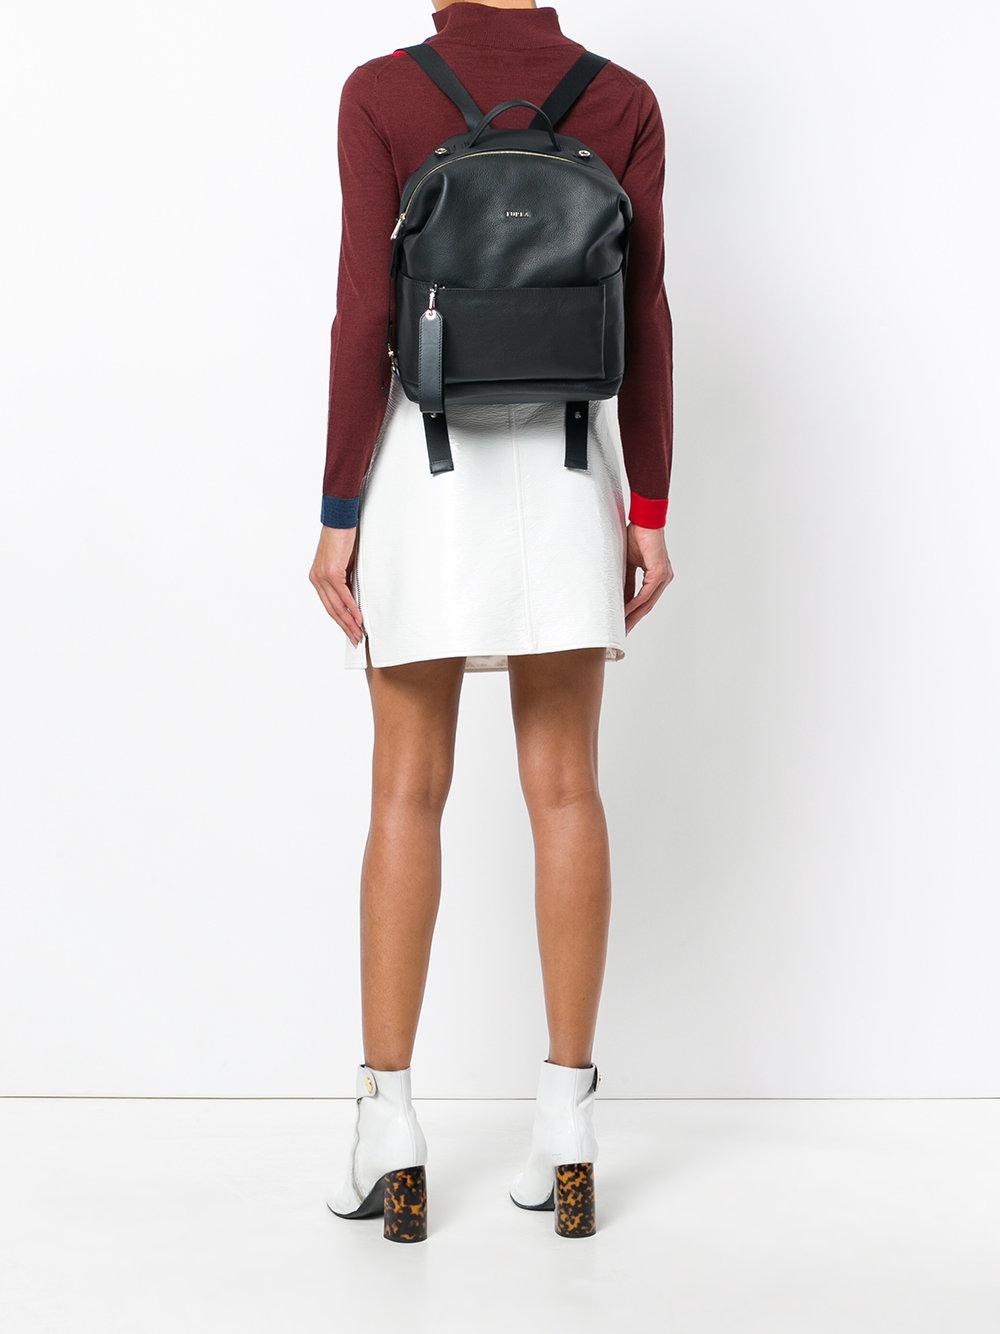 Furla Leather Dafne Avatar Backpack in Black - Lyst